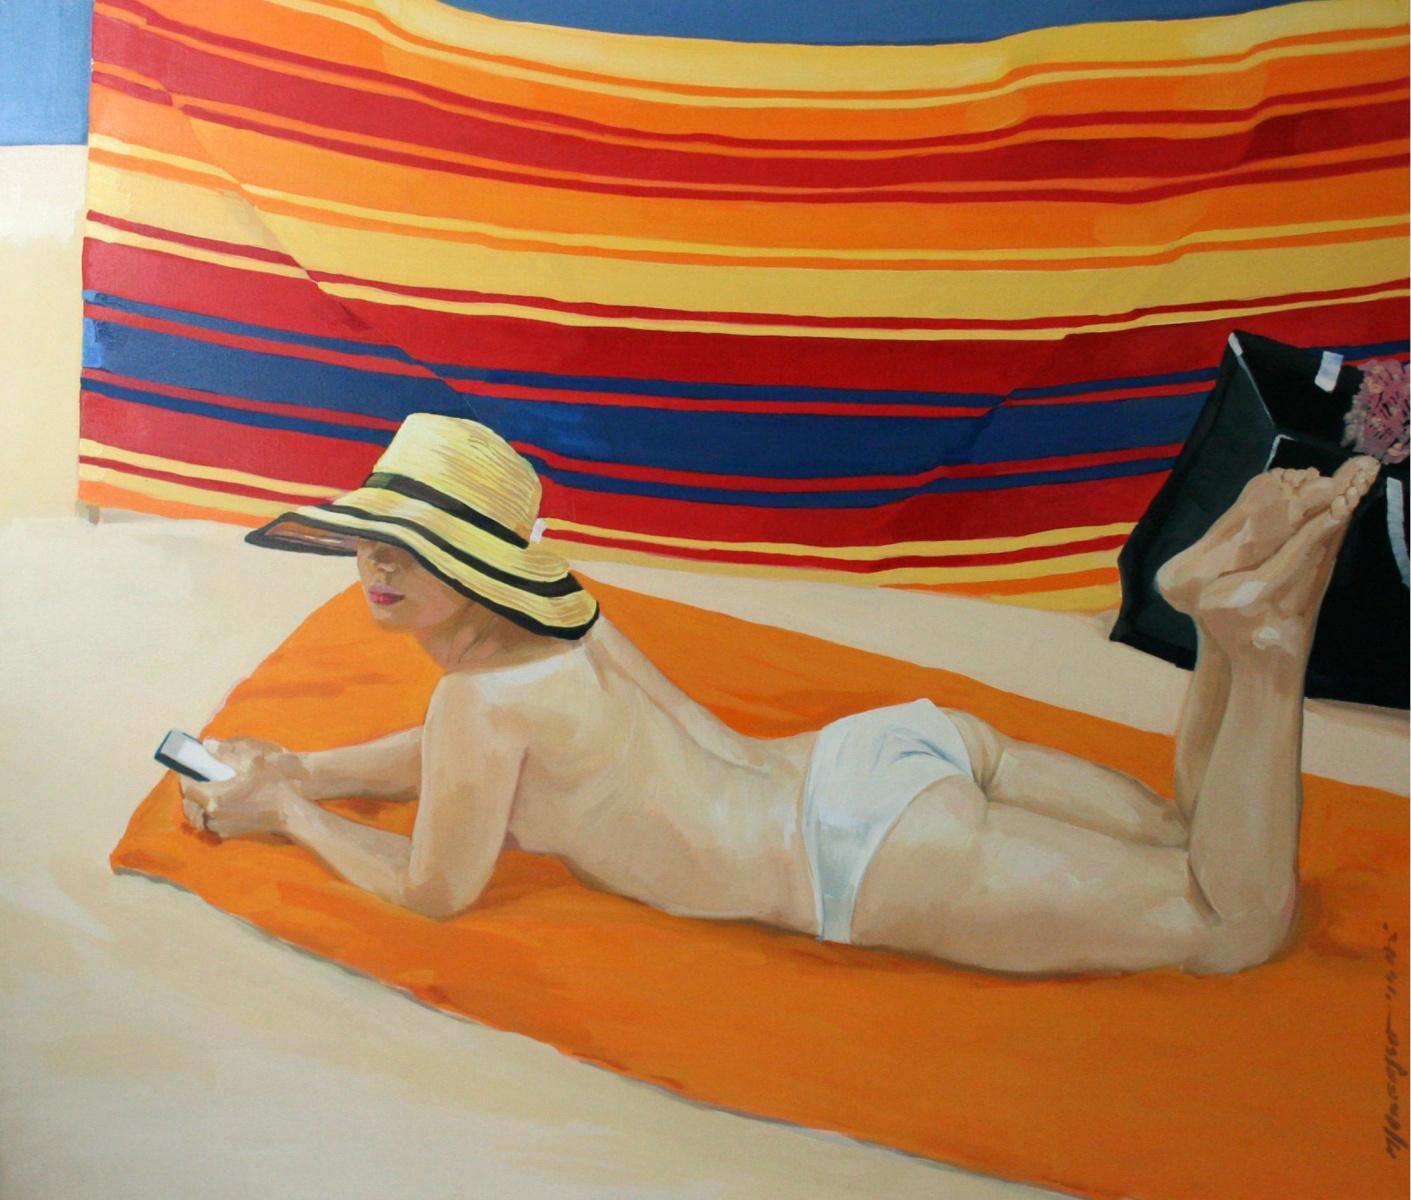 Figurative Painting Marek Okrassa - A Beach Screem - Peinture à l'huile sur toile contemporaine, peinture réaliste figurative